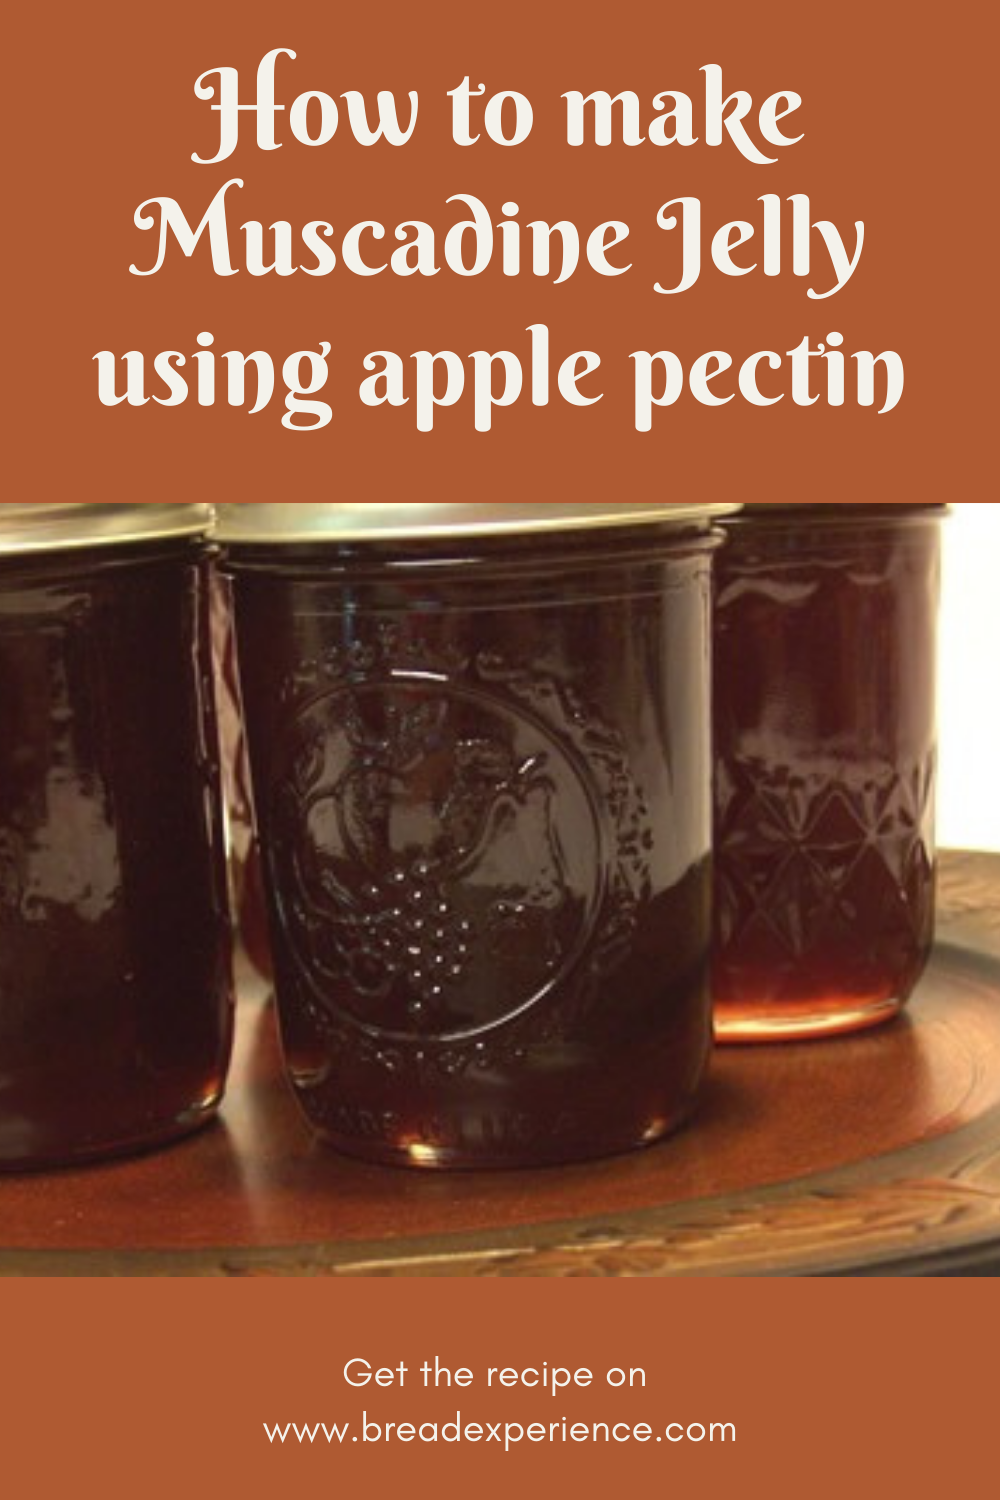 Make Muscadine Jelly Using Apple Pectin